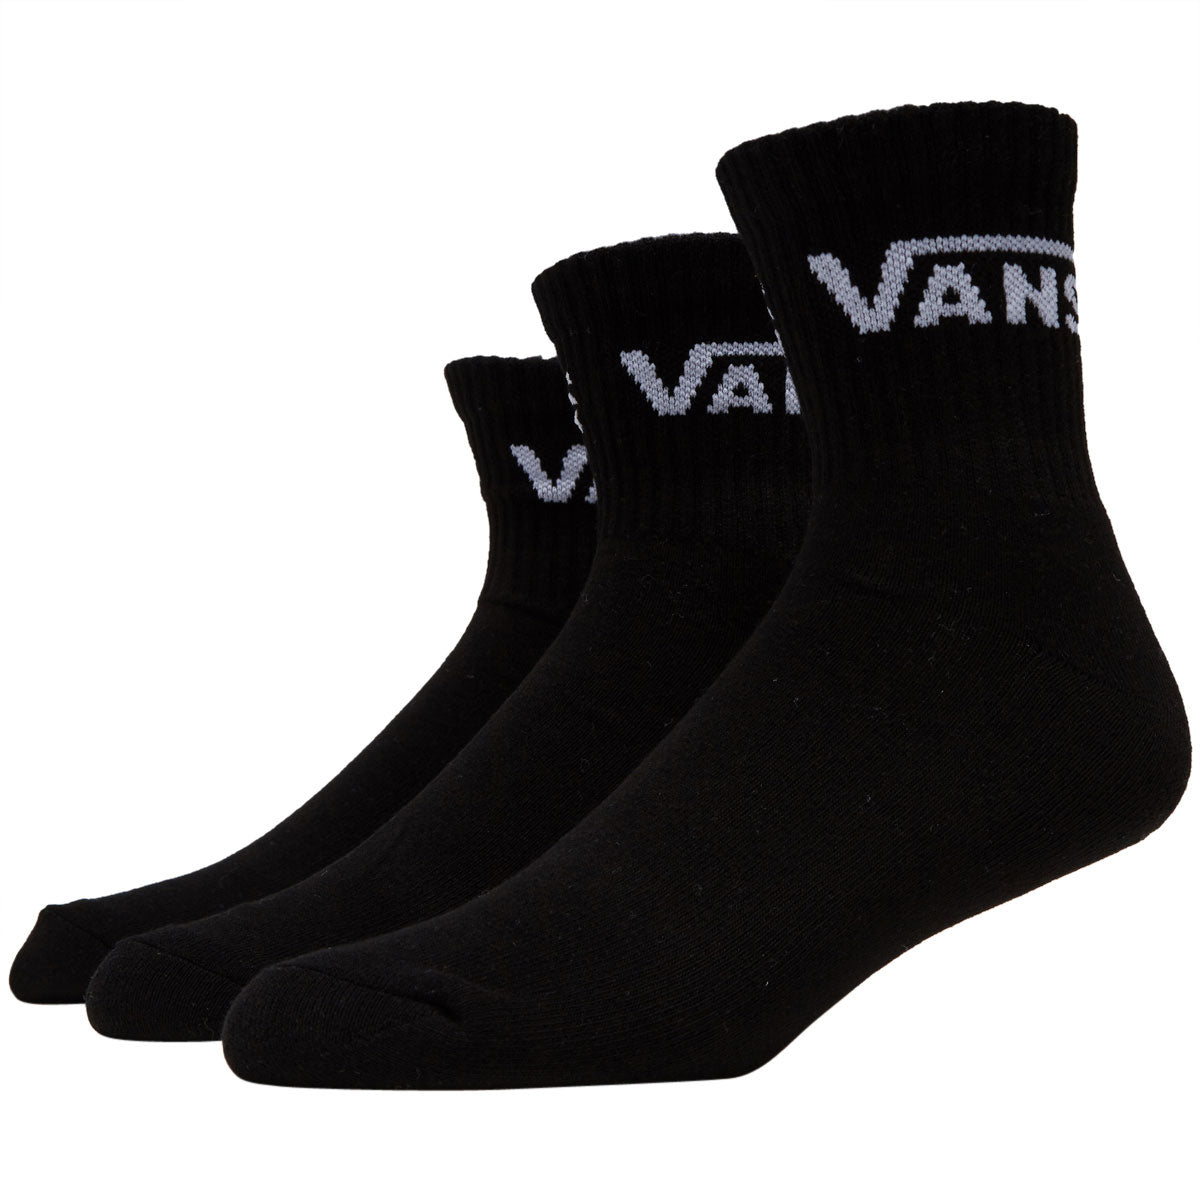 Vans Classic Half Crew Socks - Black image 1